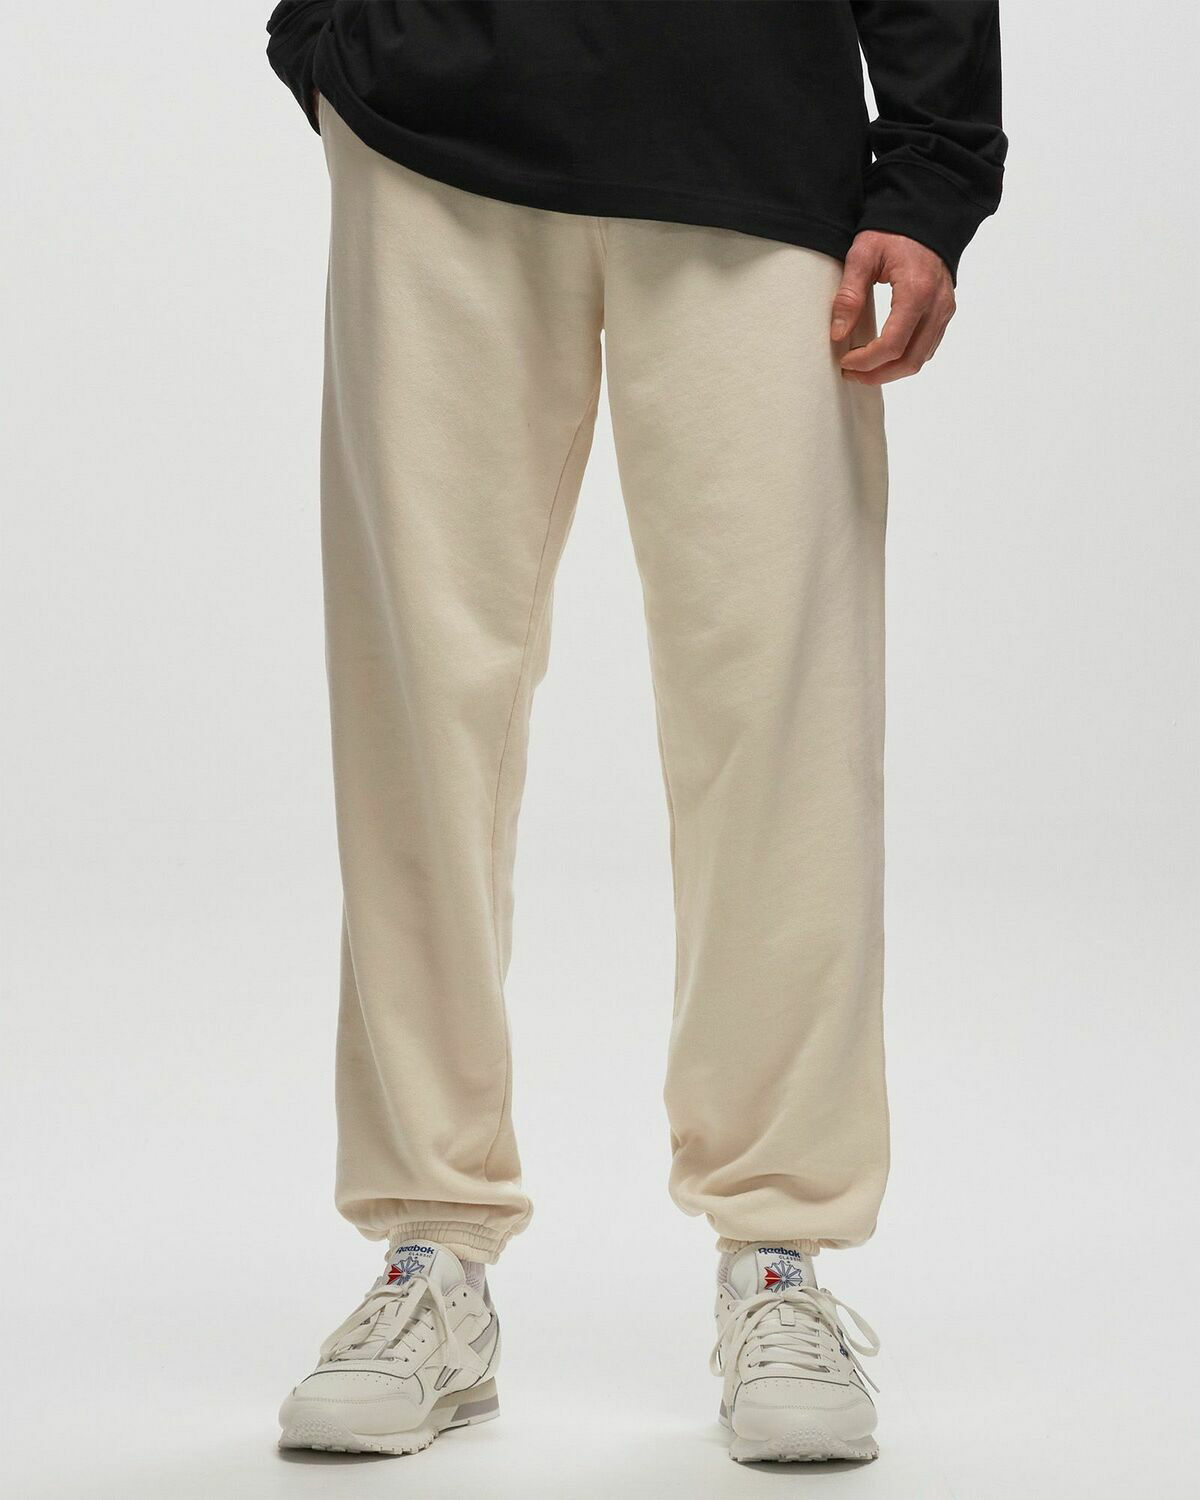 Reebok Classics Natural Dye Pants Beige - Mens - Sweatpants Reebok